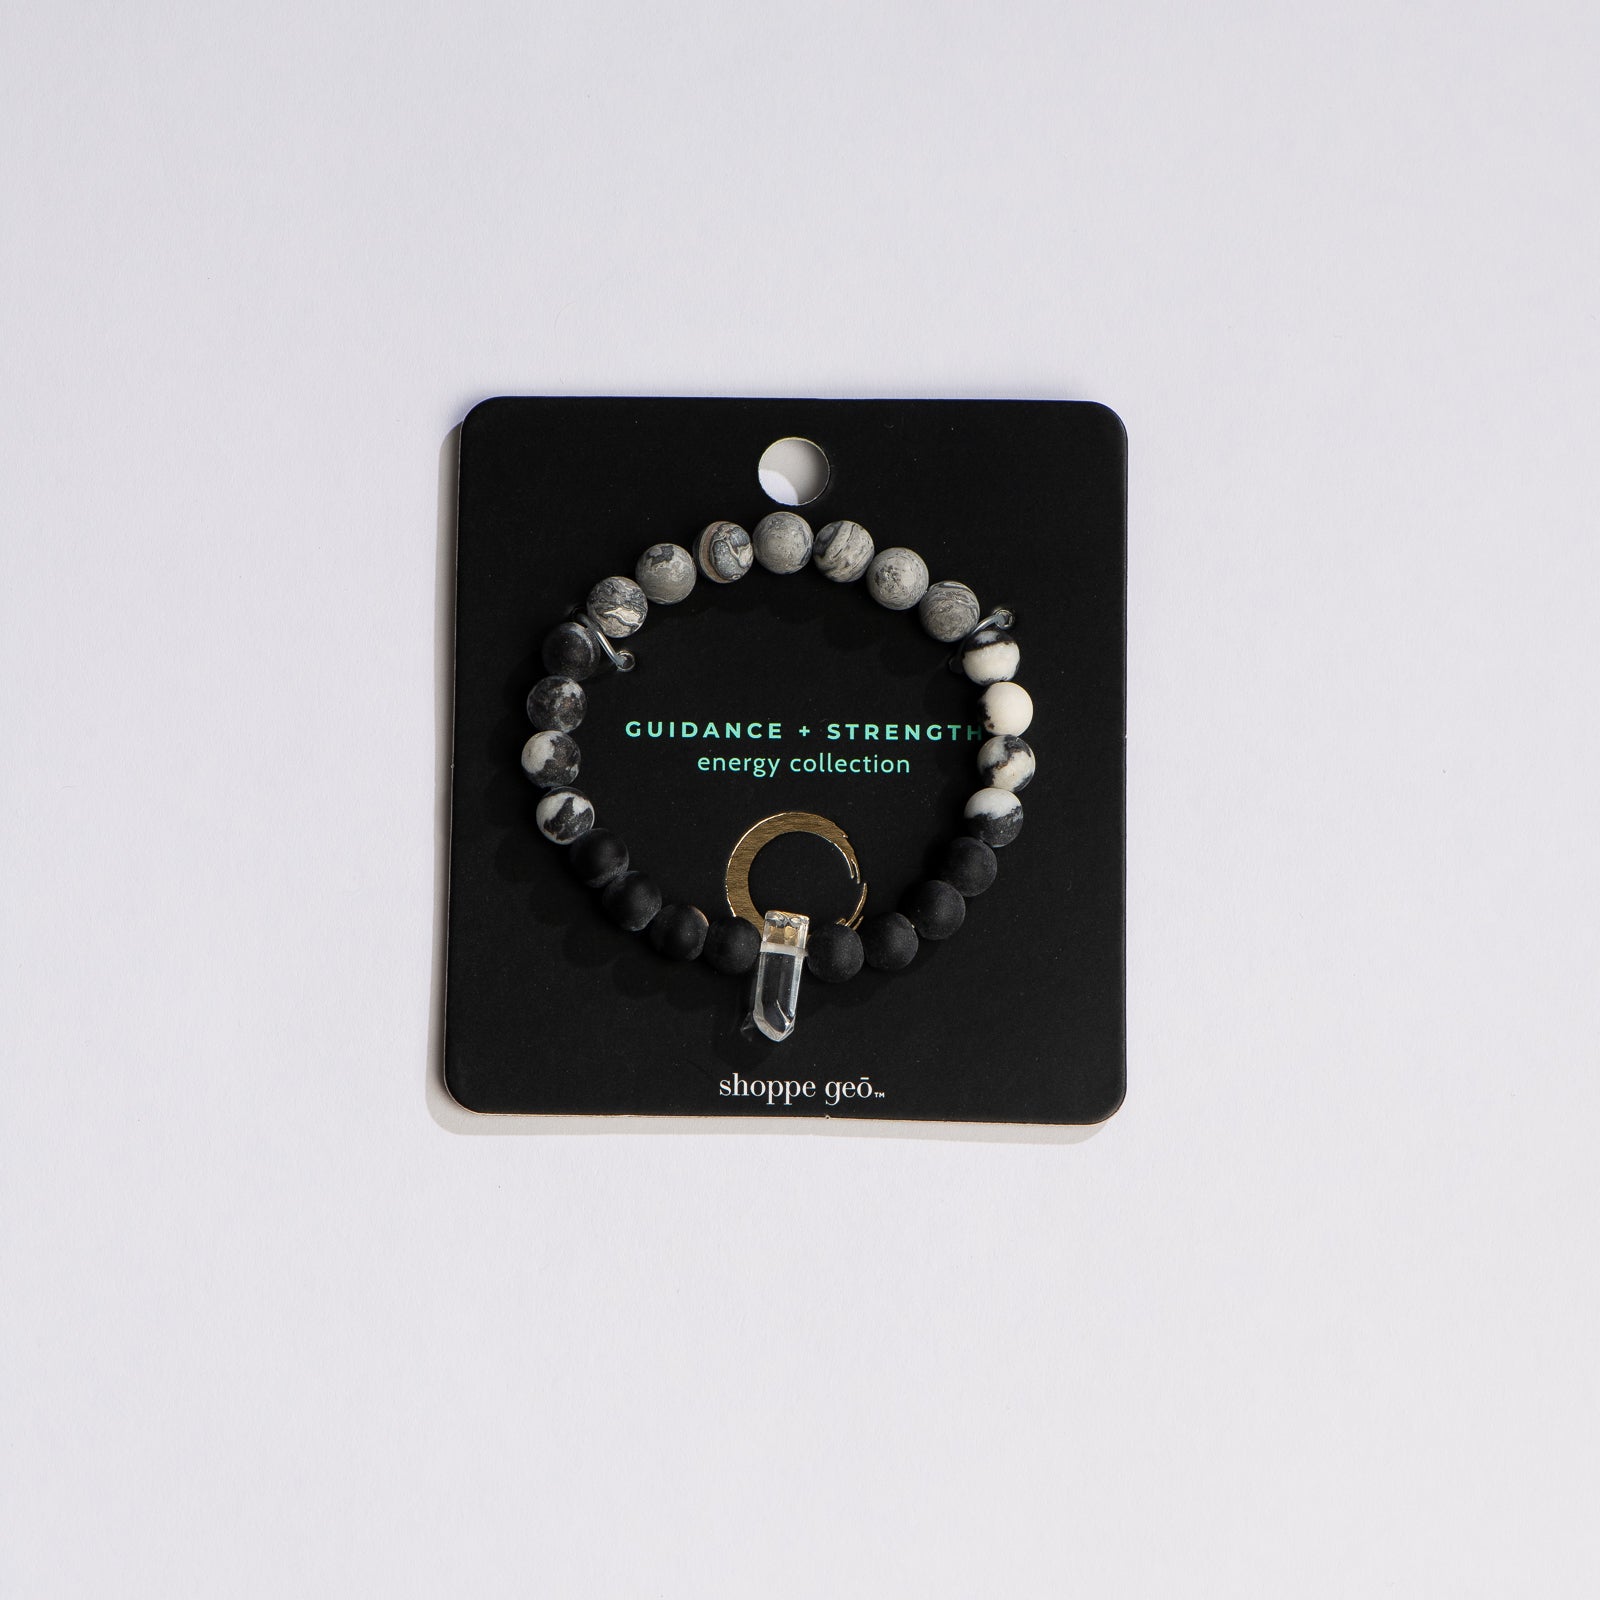 shoppe geo energy collection guidance strength gemstone bracelet